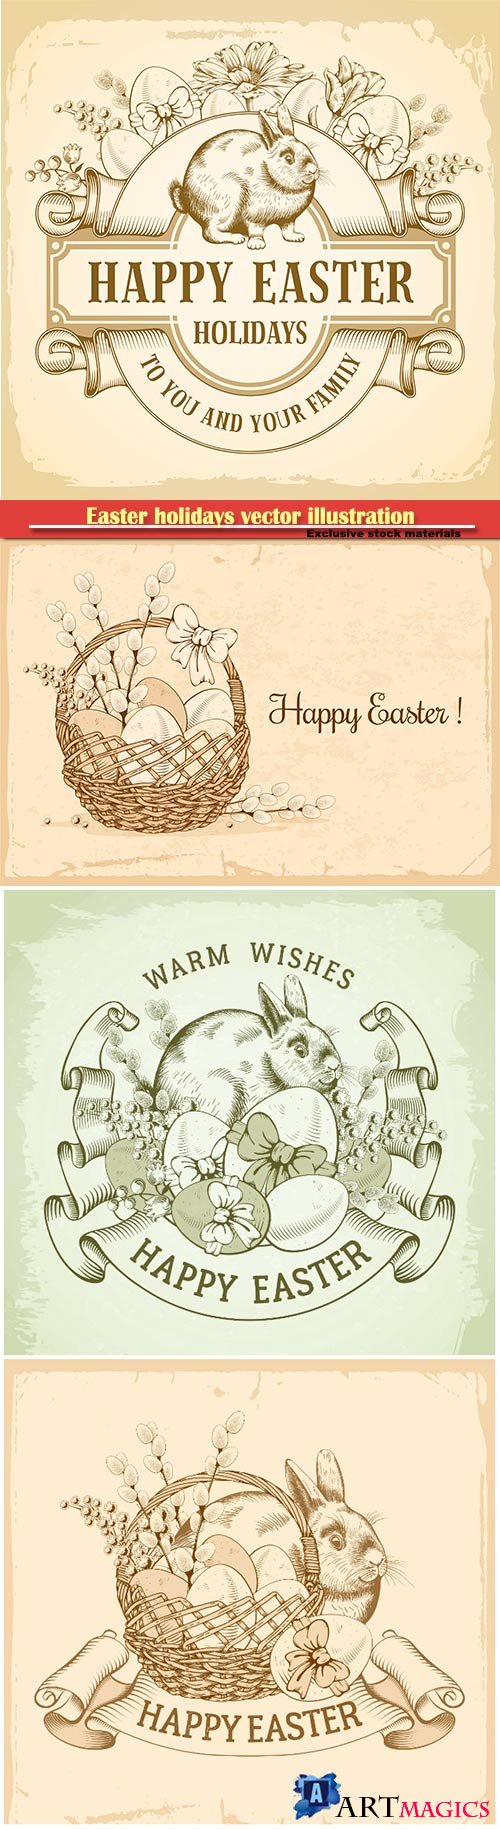 Easter holidays vector illustration # 13